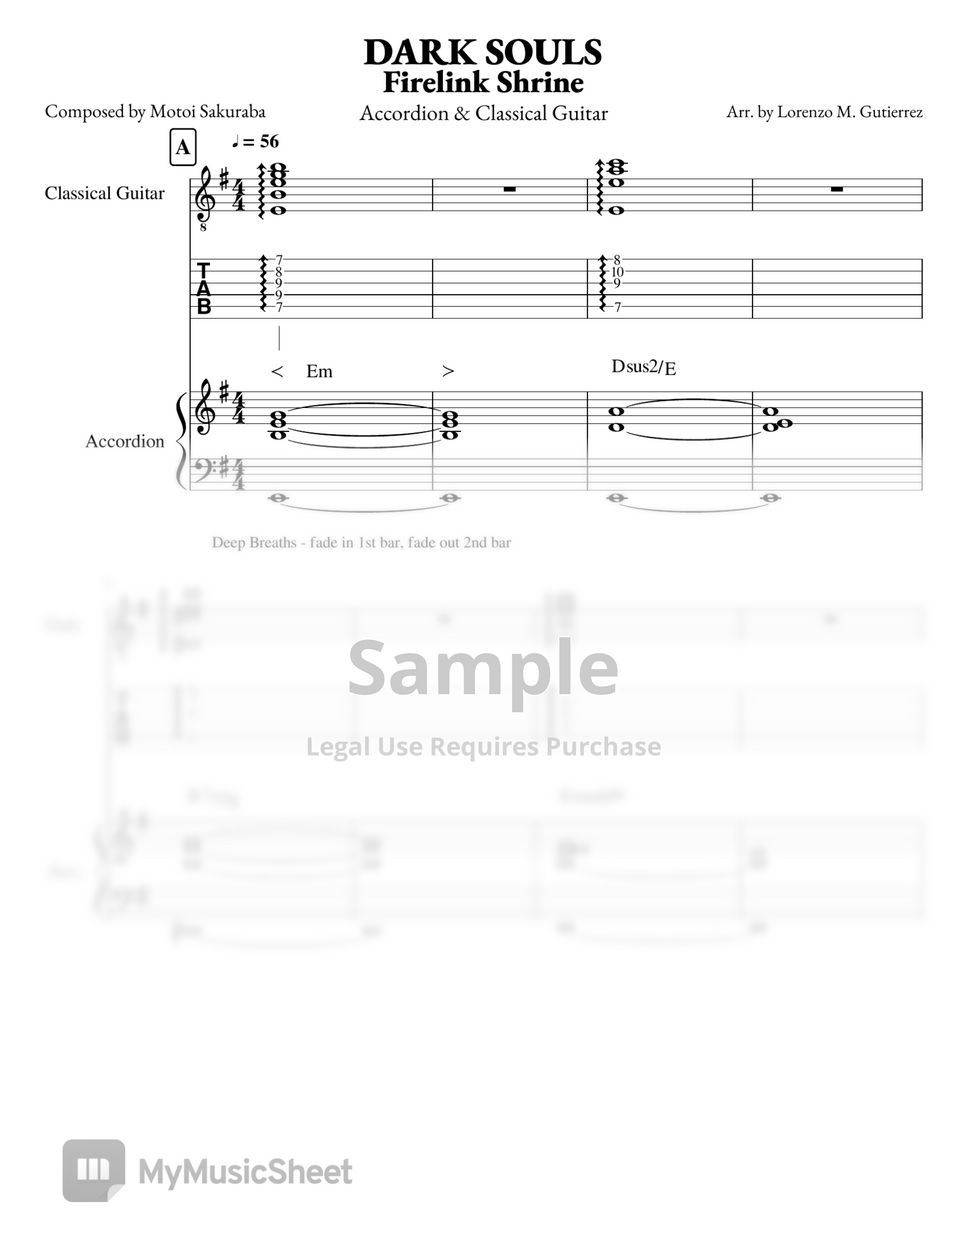 Motoi Sakuraba - Firelink Shrine (Accordion & Classical Guitar) by Lorenzo M. Gutiérrez